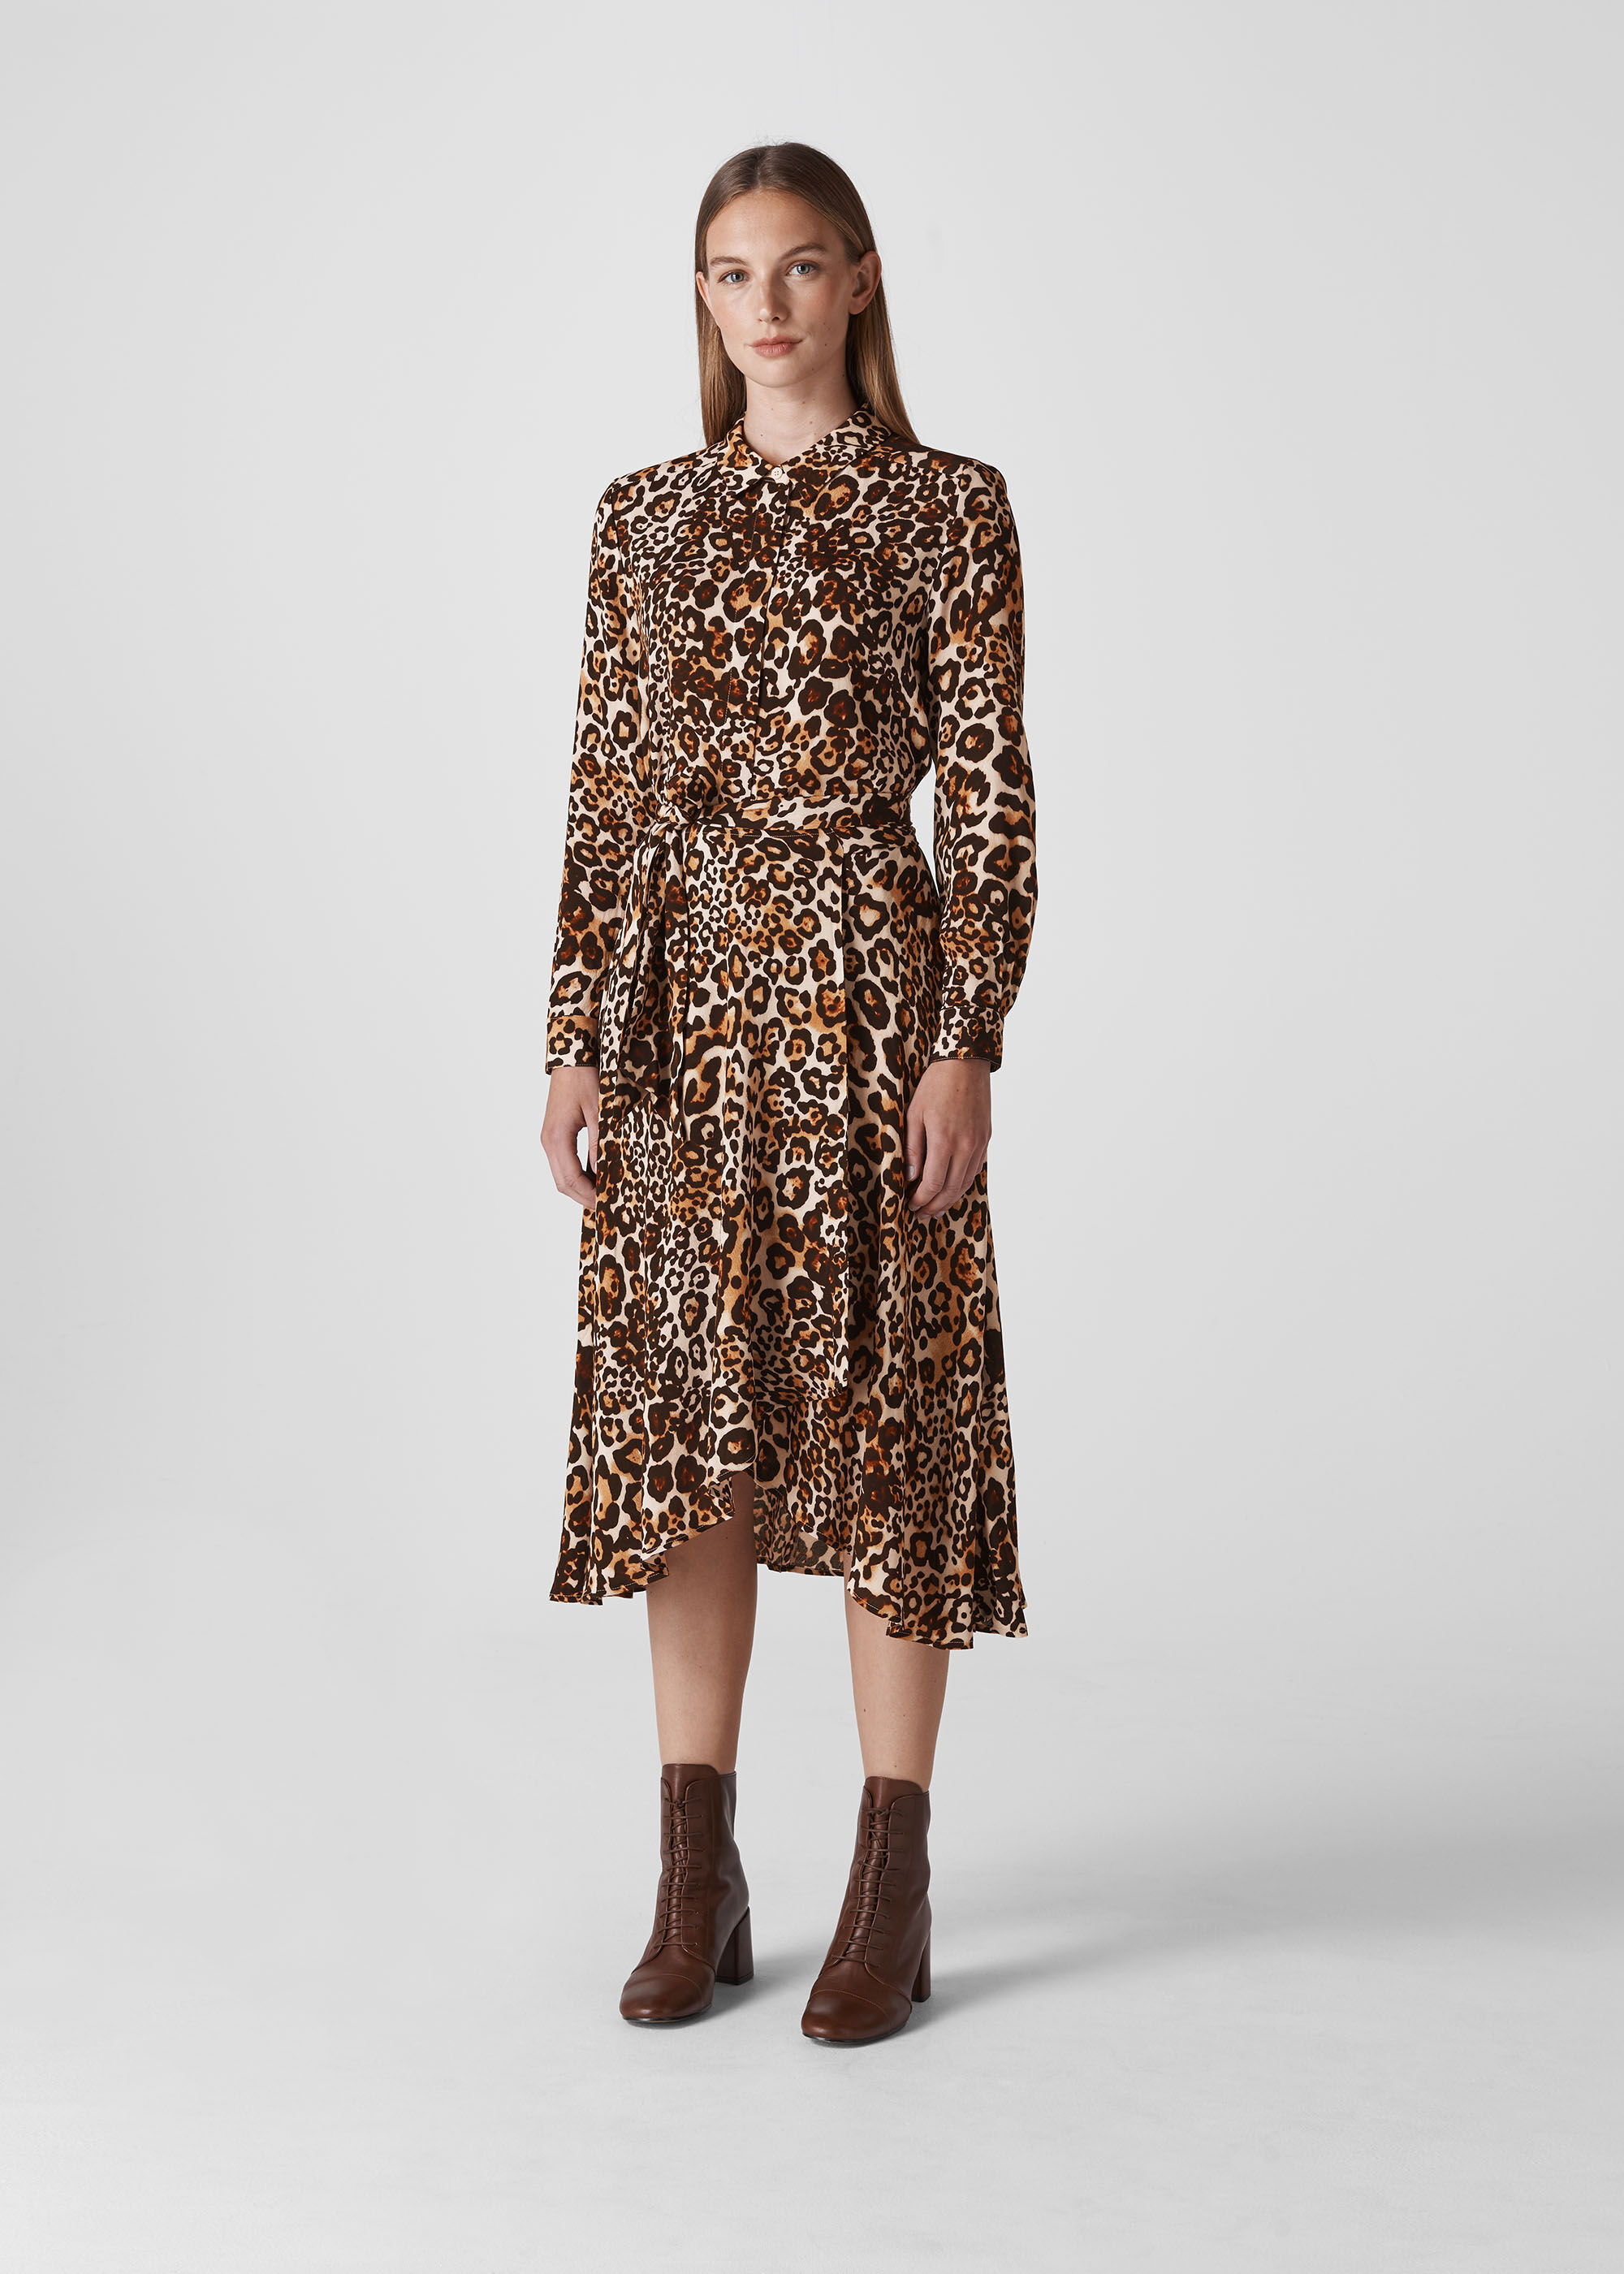 Leopard Print Animal Print Esme Dress ...